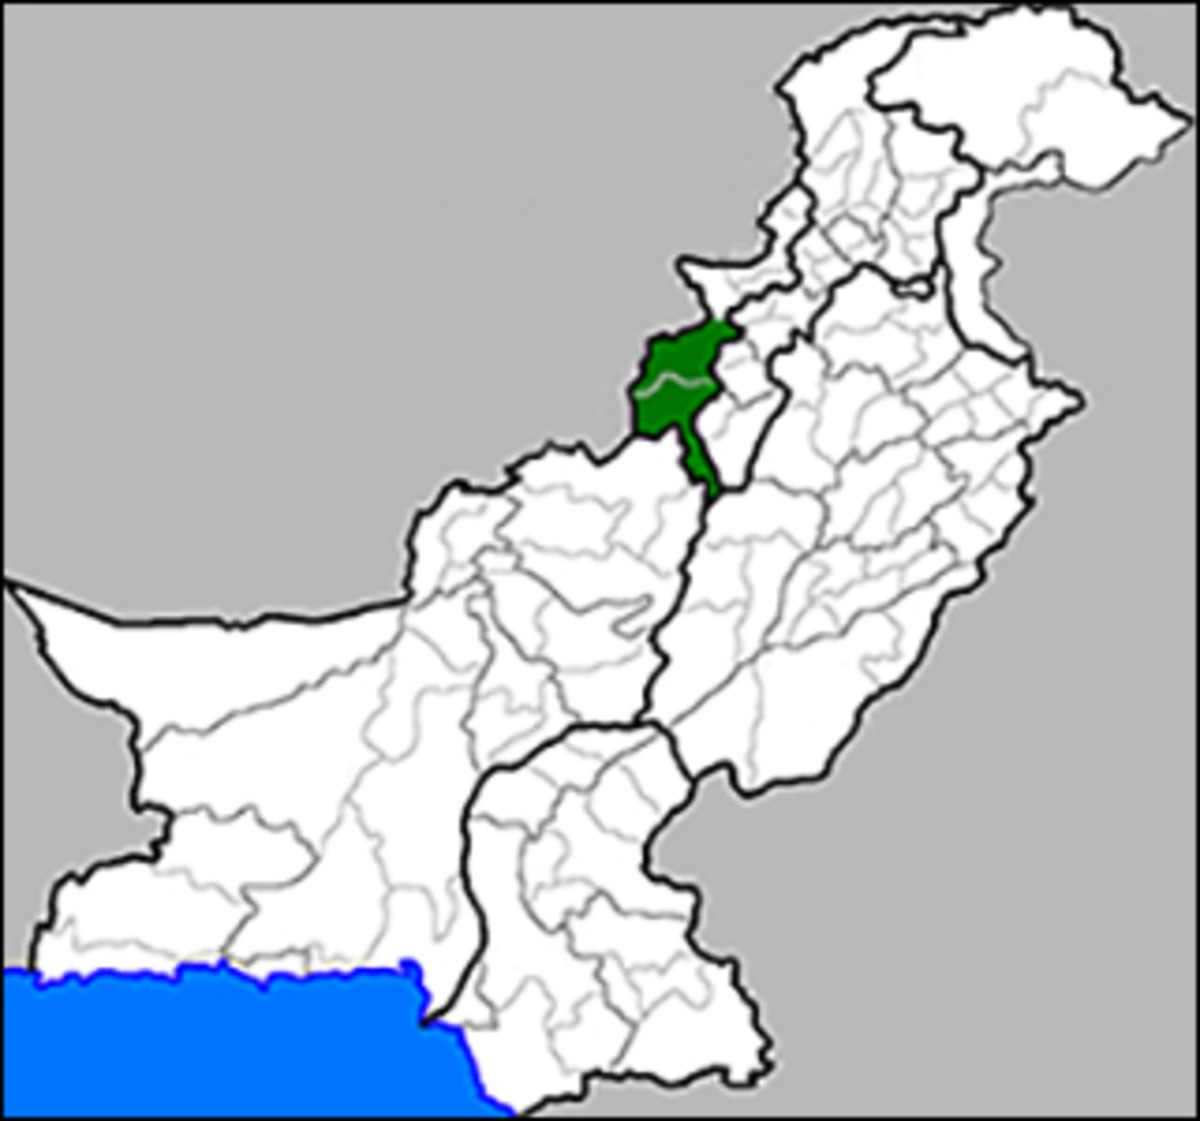 Pakistan with the Waziristan region, where the drone strikes occurred, in green. (Credit: Narayanese via Wikimedia)